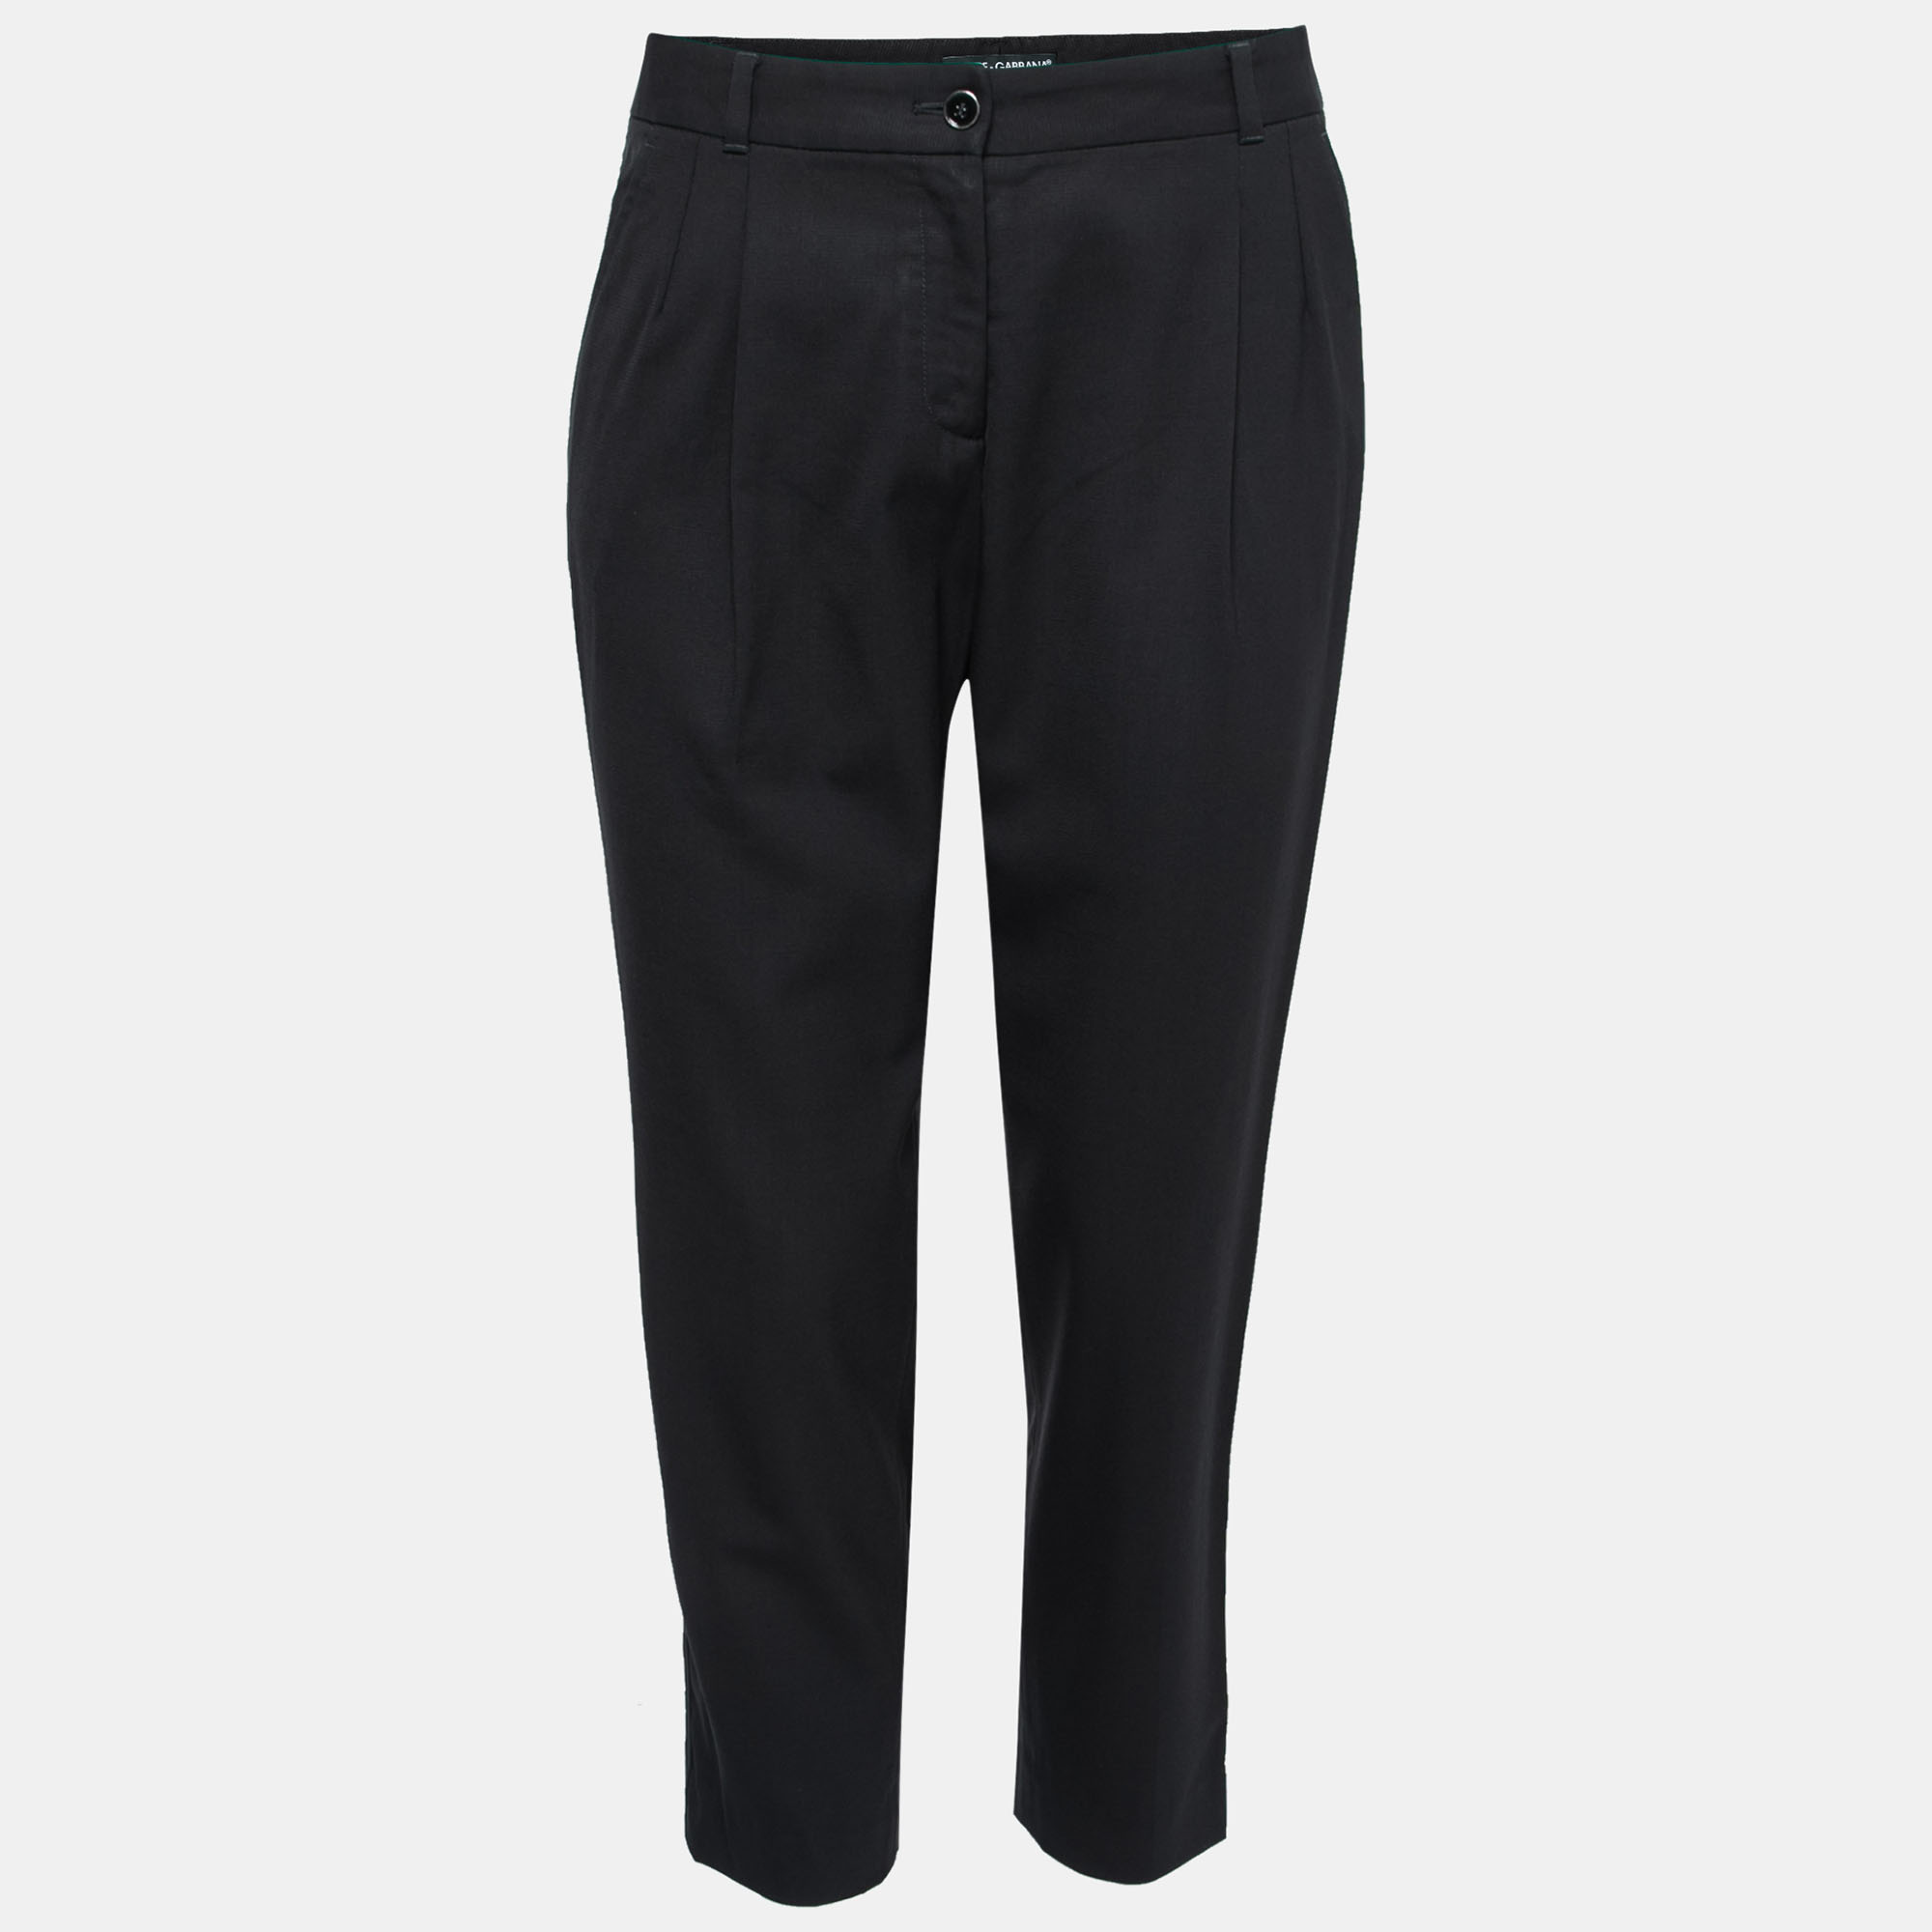 Dolce & gabbana black wool slim fit trousers s waist 28"